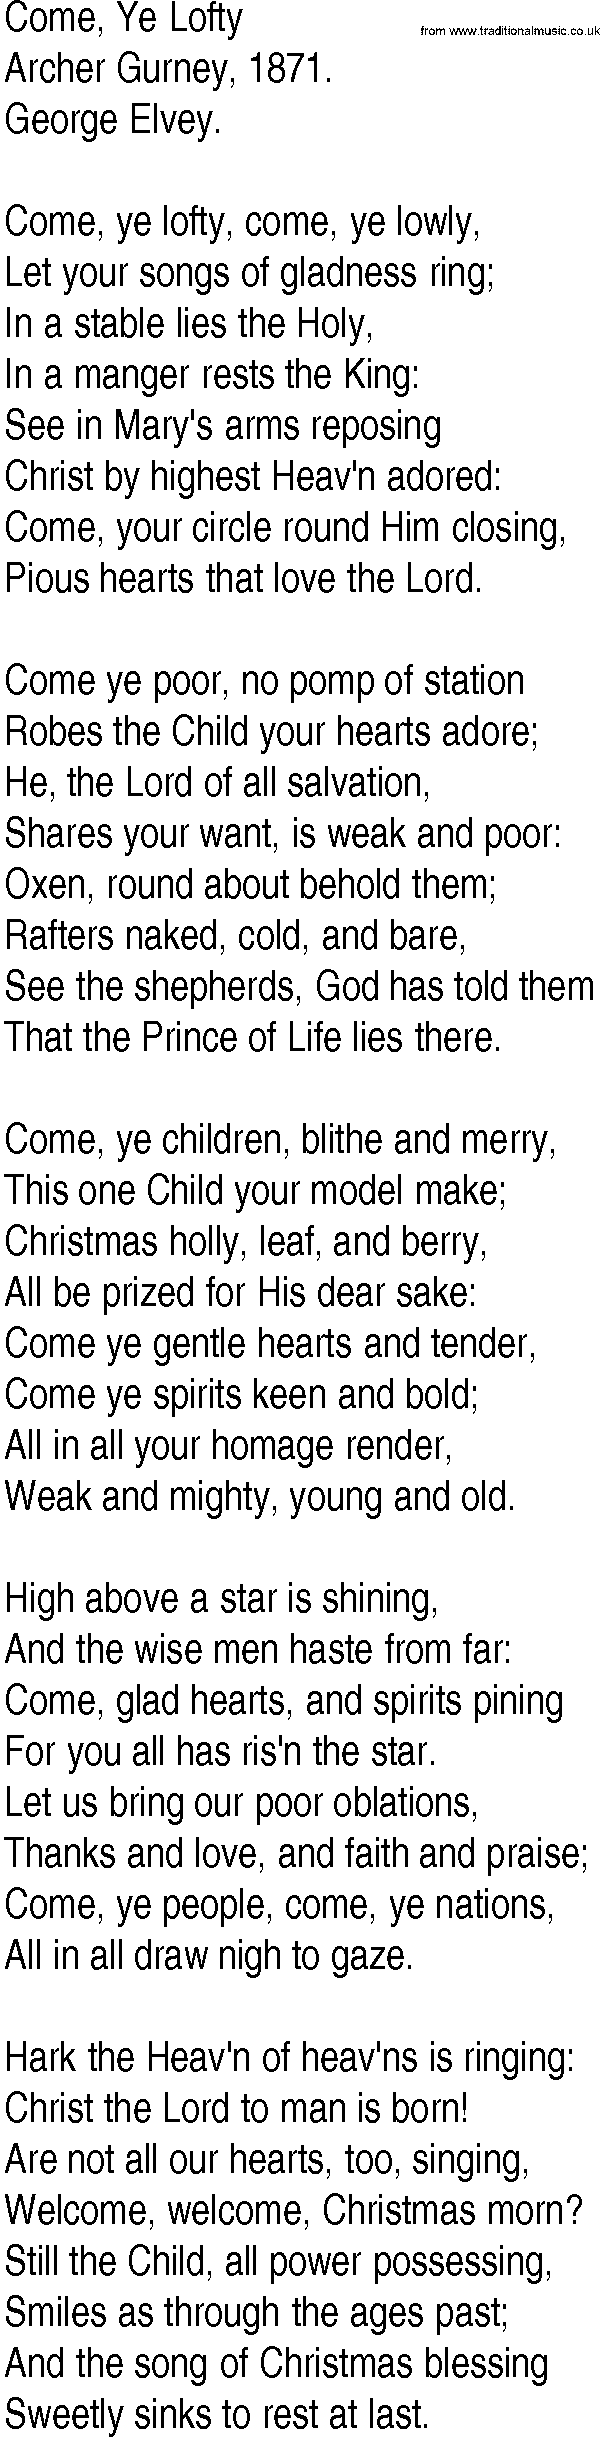 Hymn and Gospel Song: Come, Ye Lofty by Archer Gurney lyrics